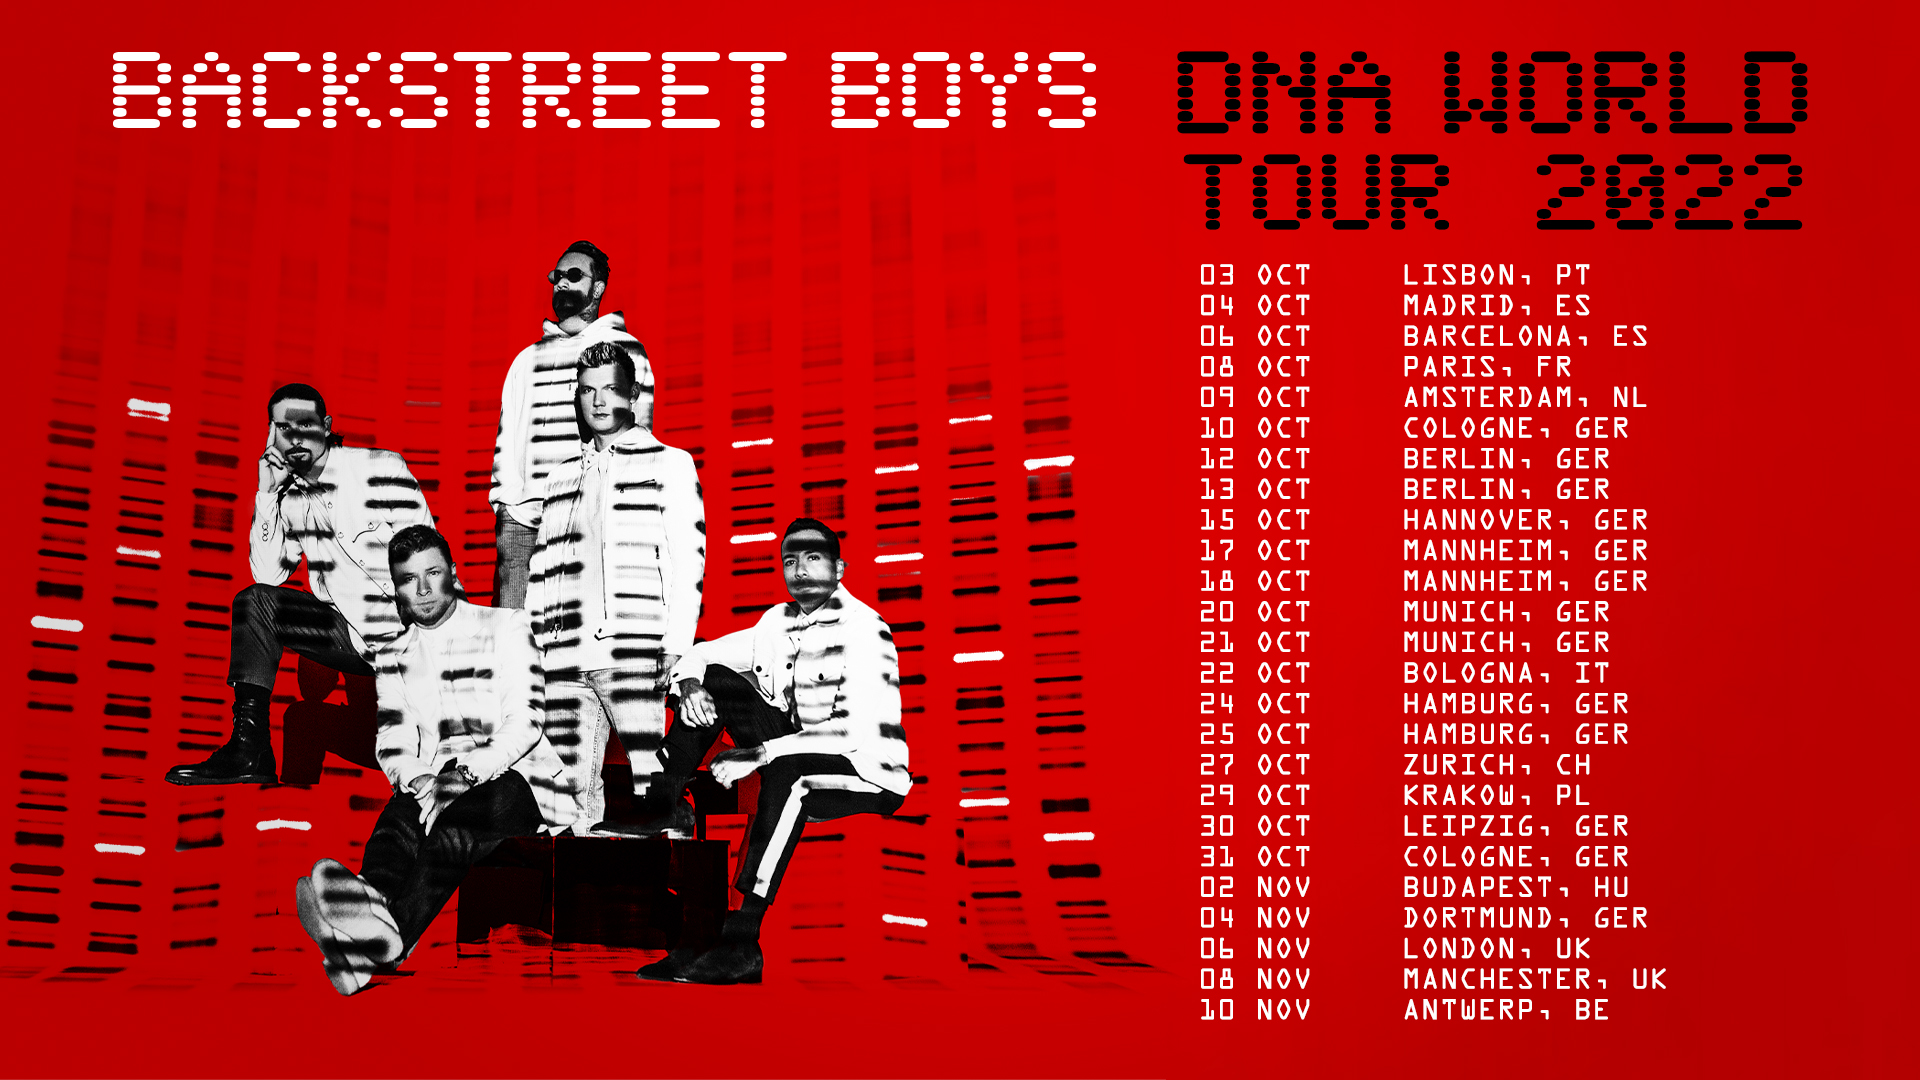 Backstreet Boys DNA Tour 2022